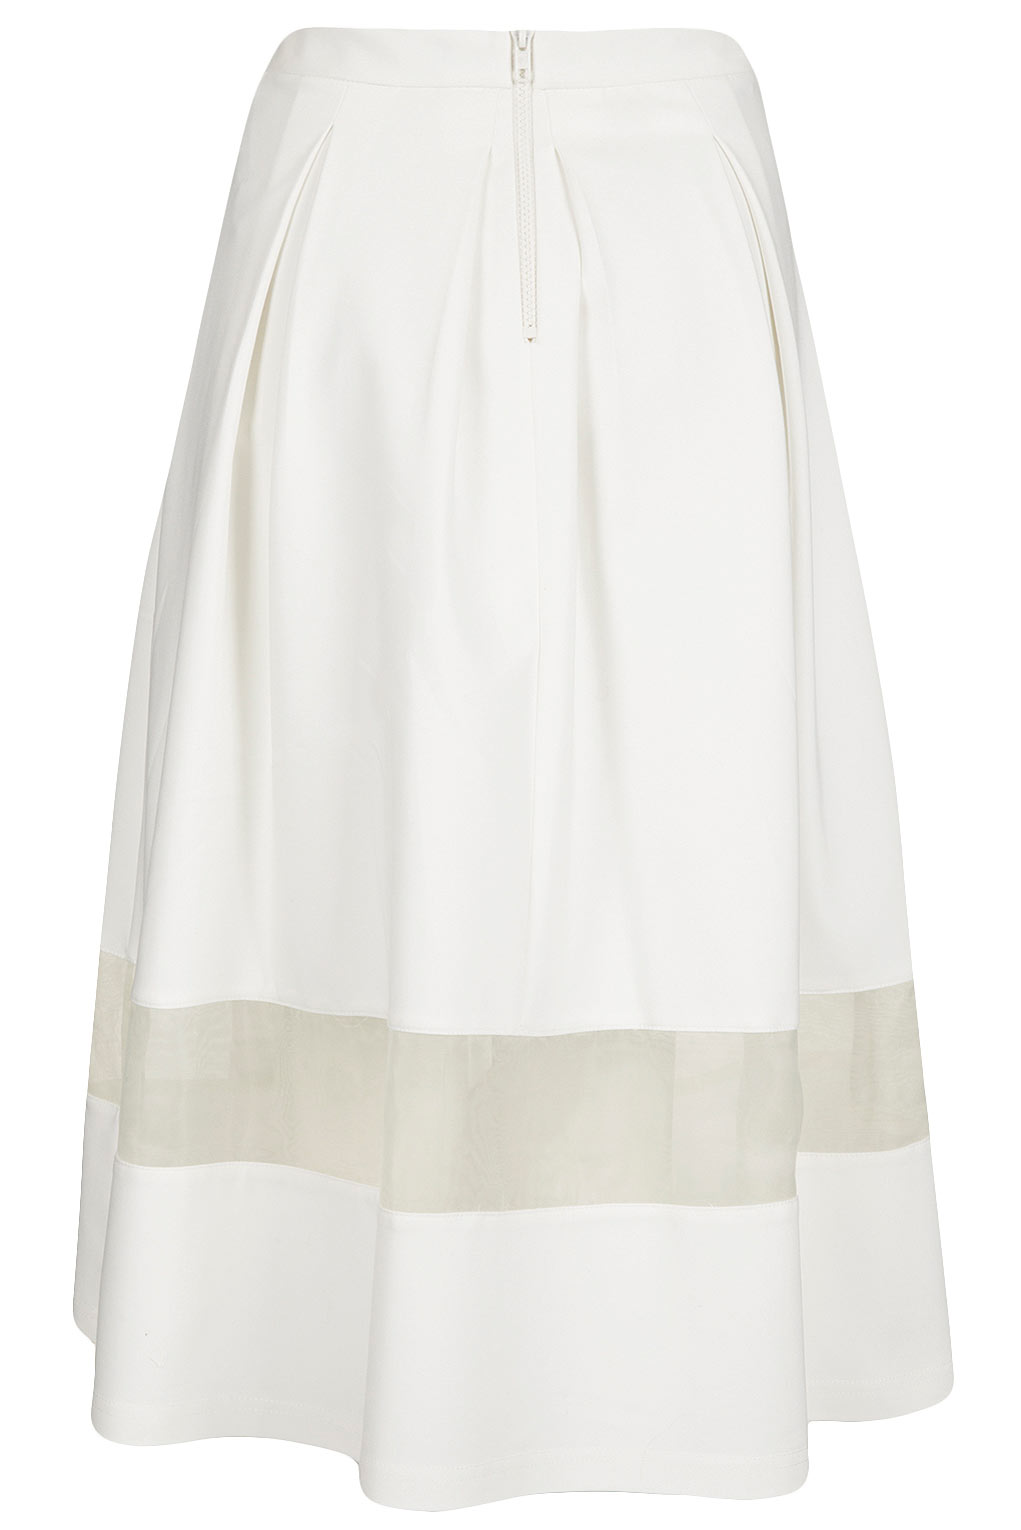 TOPSHOP Organza Insert Calf Skirt in White - Lyst